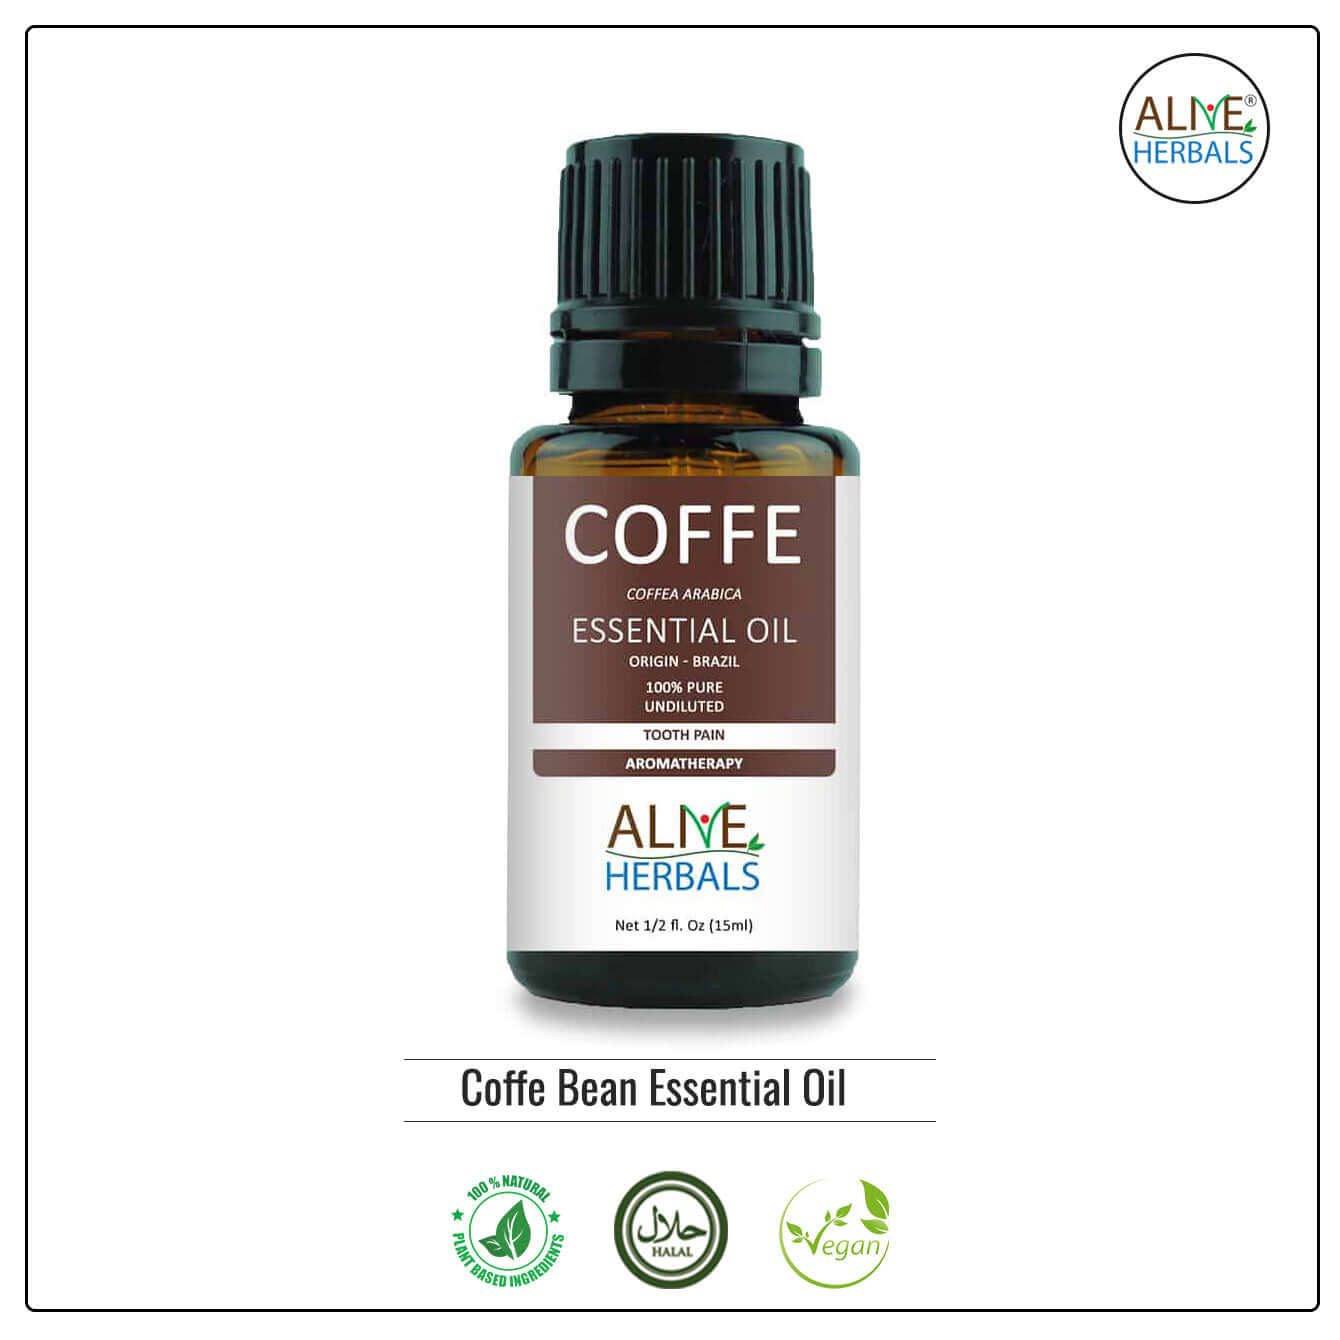 Coffee Bean Essential Oil - Buy at Natural Food Store | Alive Herbals.